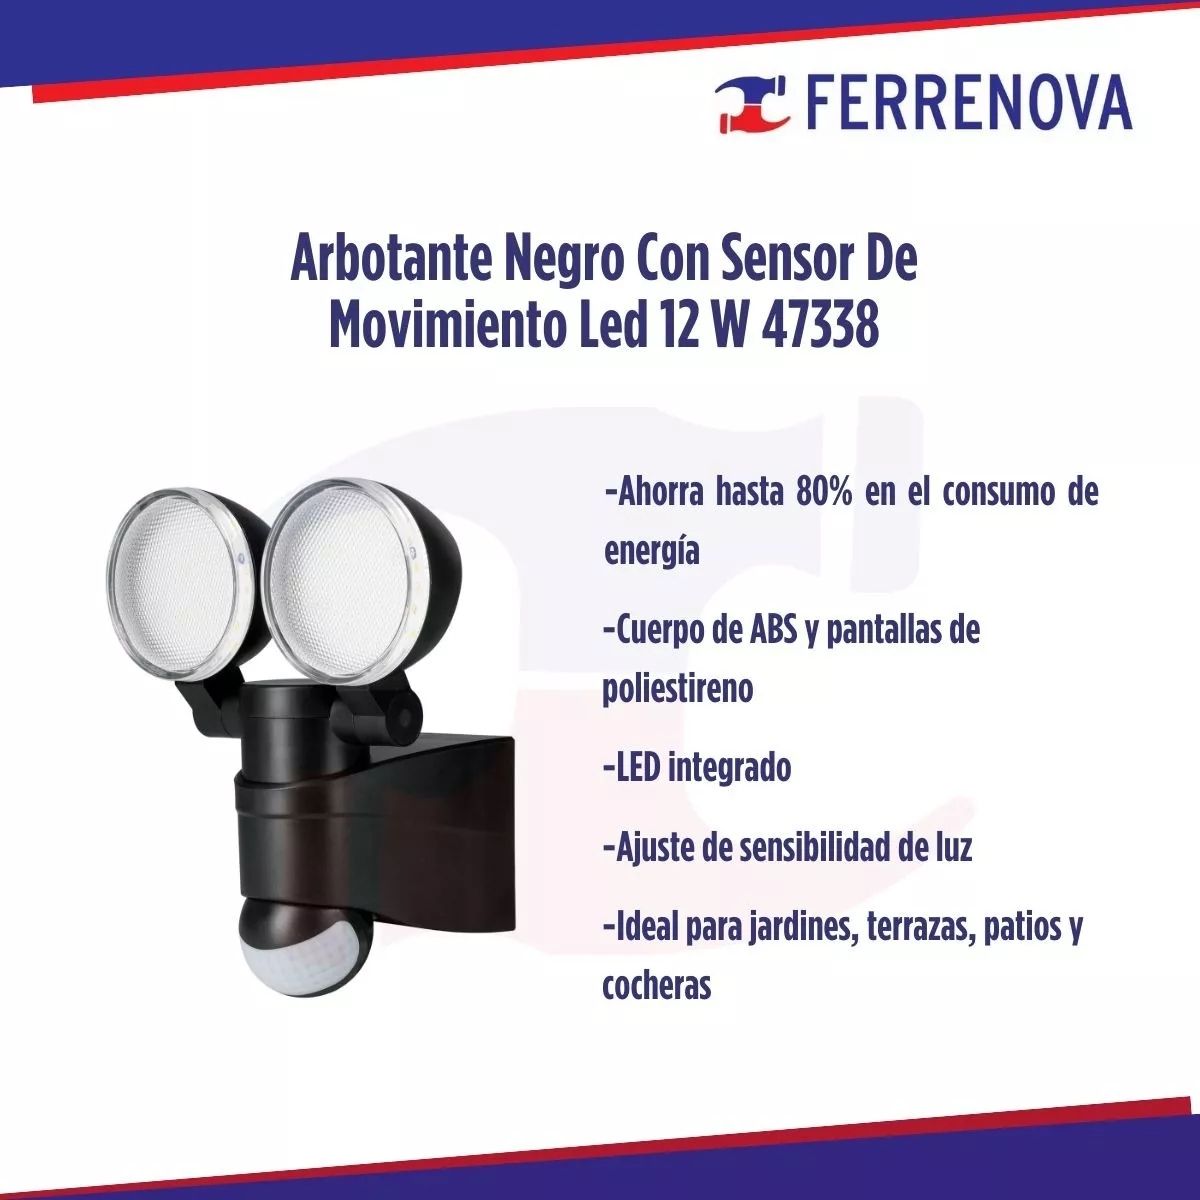 Arbotante LED 12 W Negro Con Sensor De Movimiento Volteck 47338